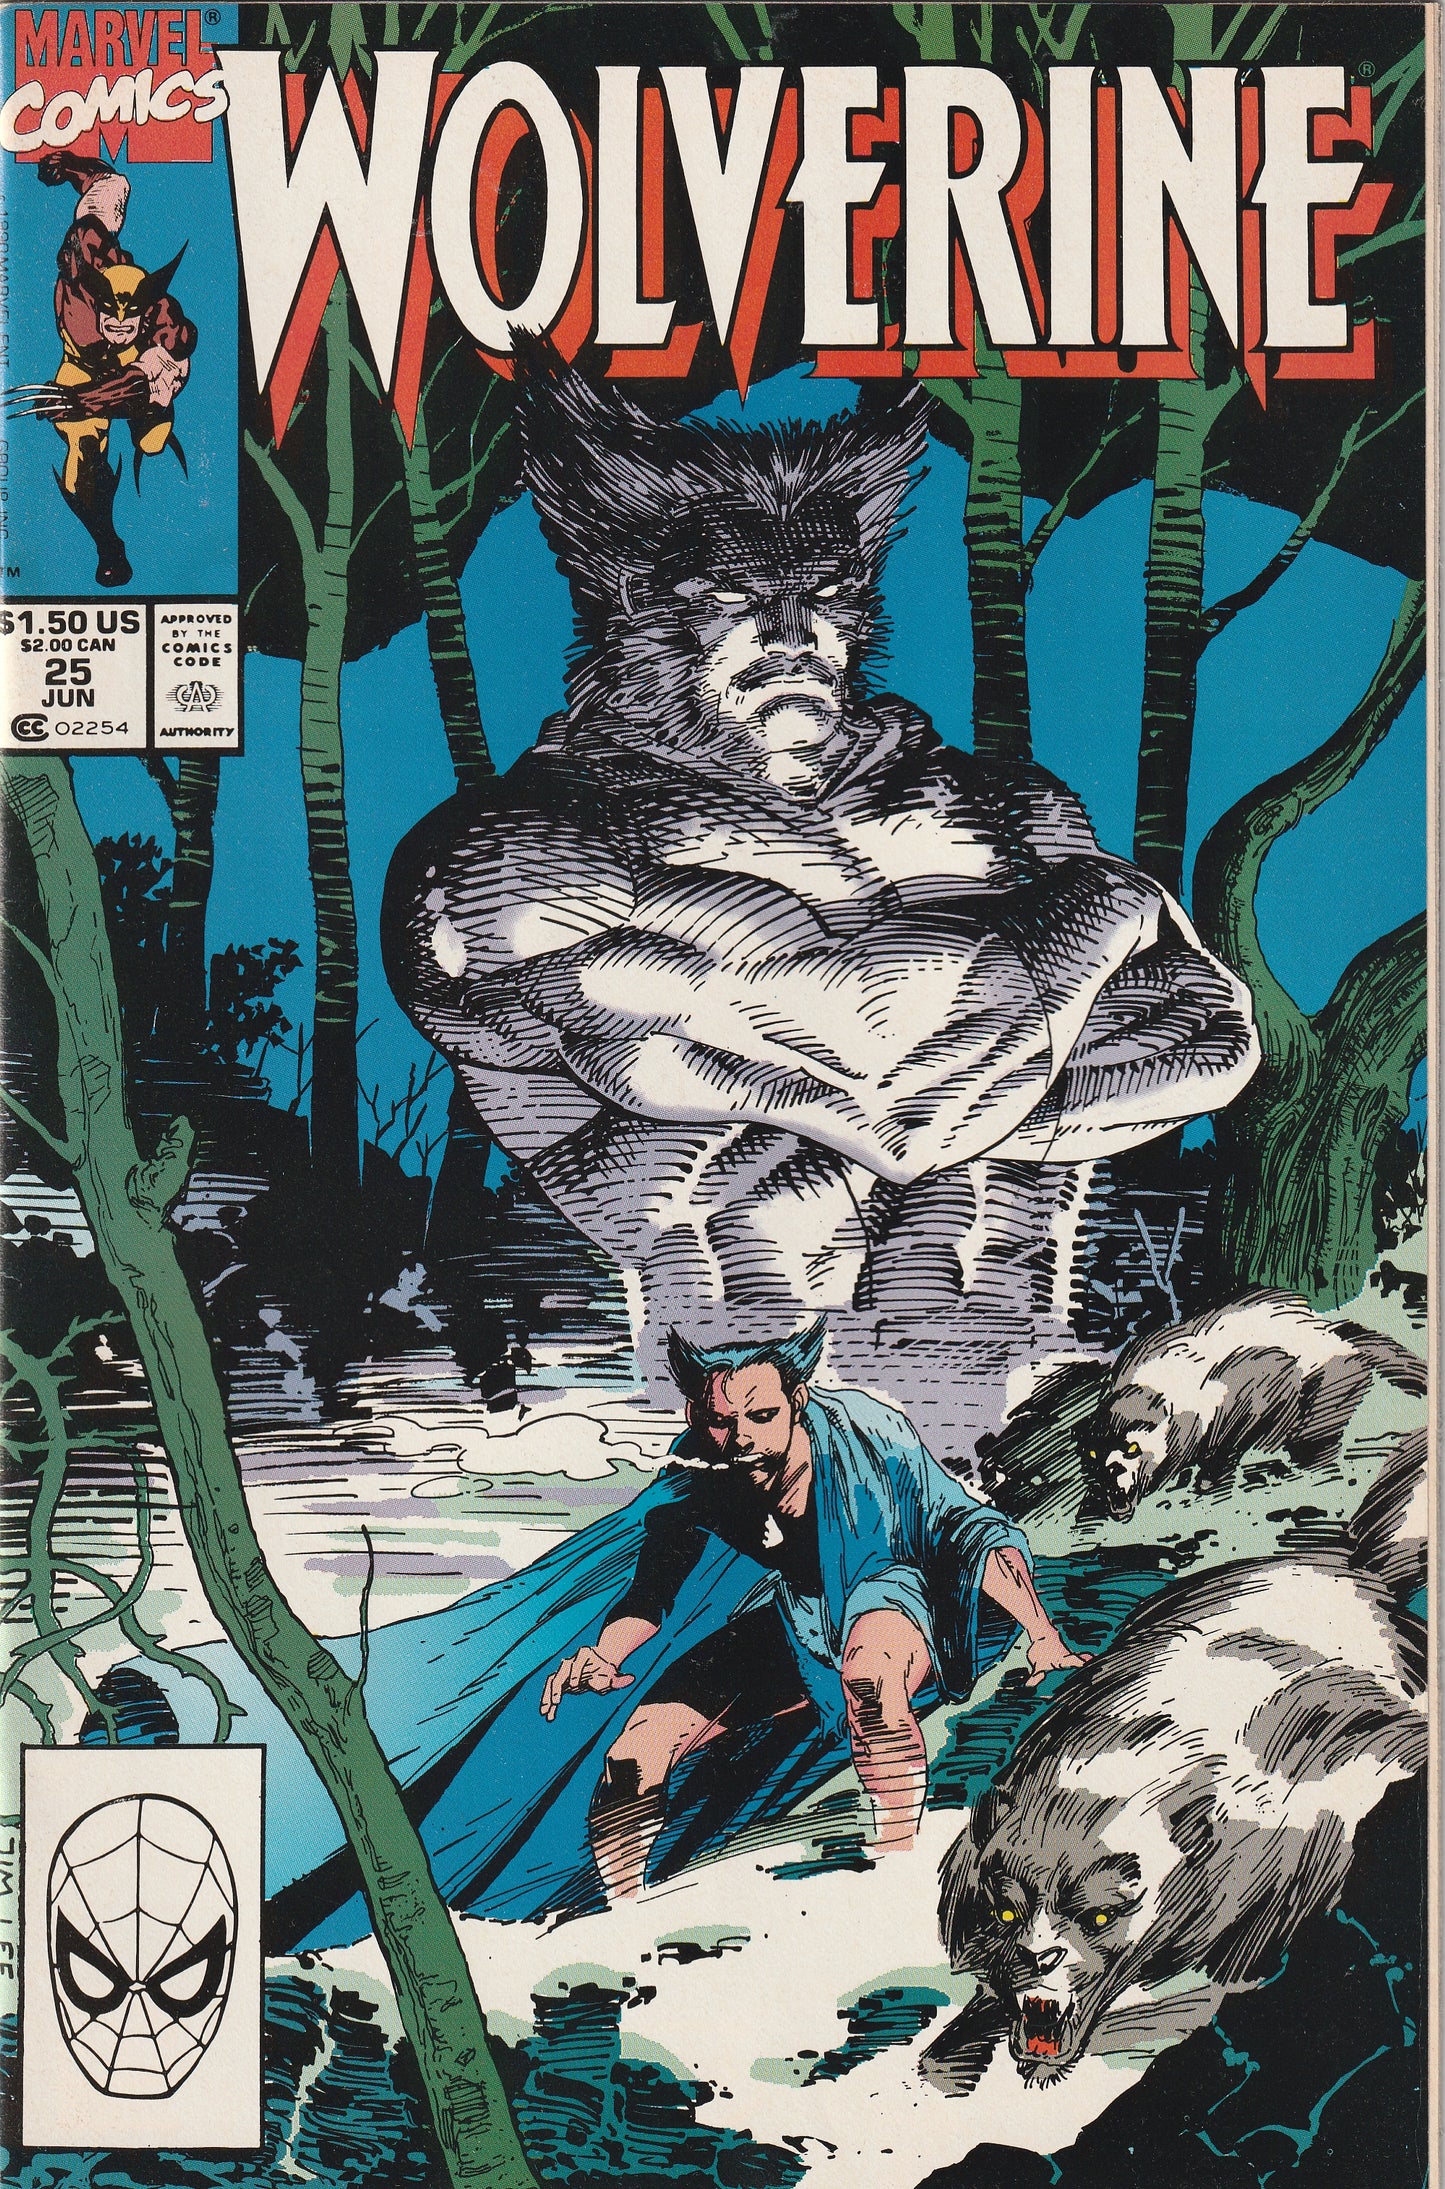 Wolverine #25 (1990) - Jim Lee cover